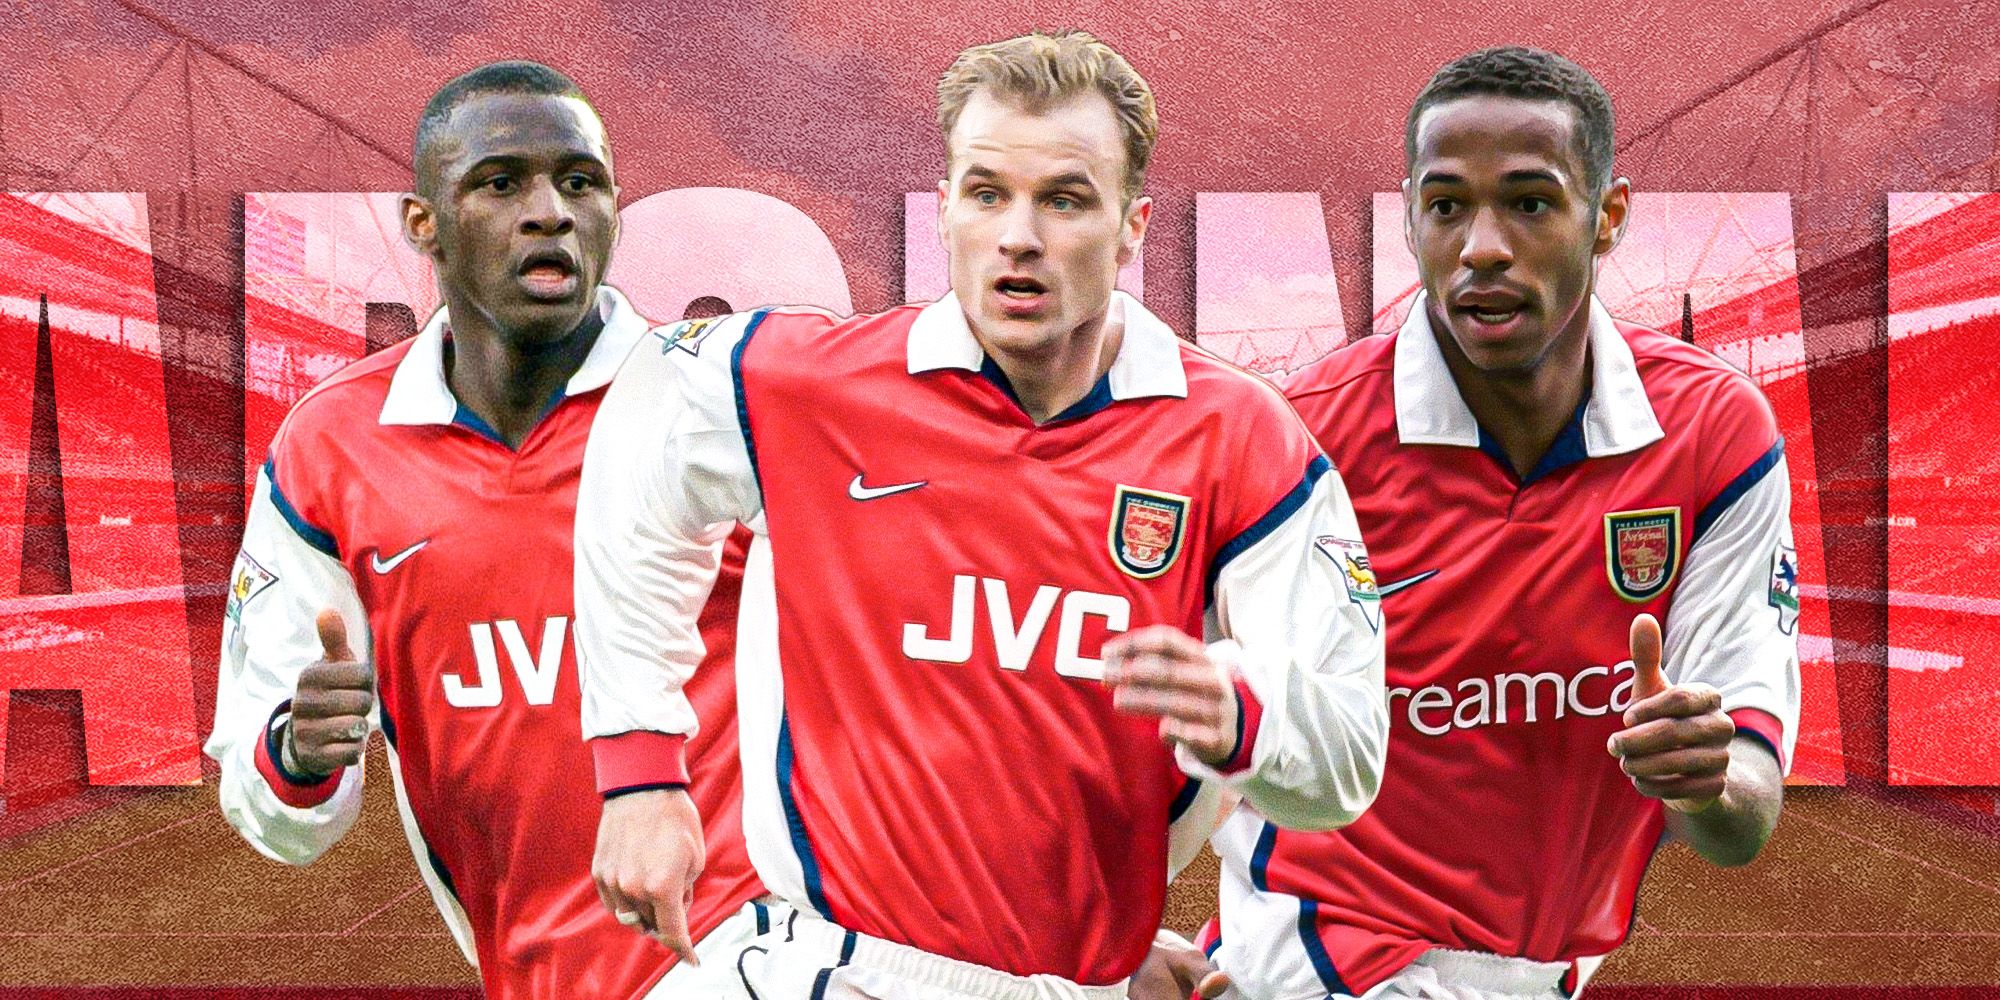 Custom image of Arsenal legends Patrick Vieira, Dennis Bergkamp and Thierry Henry